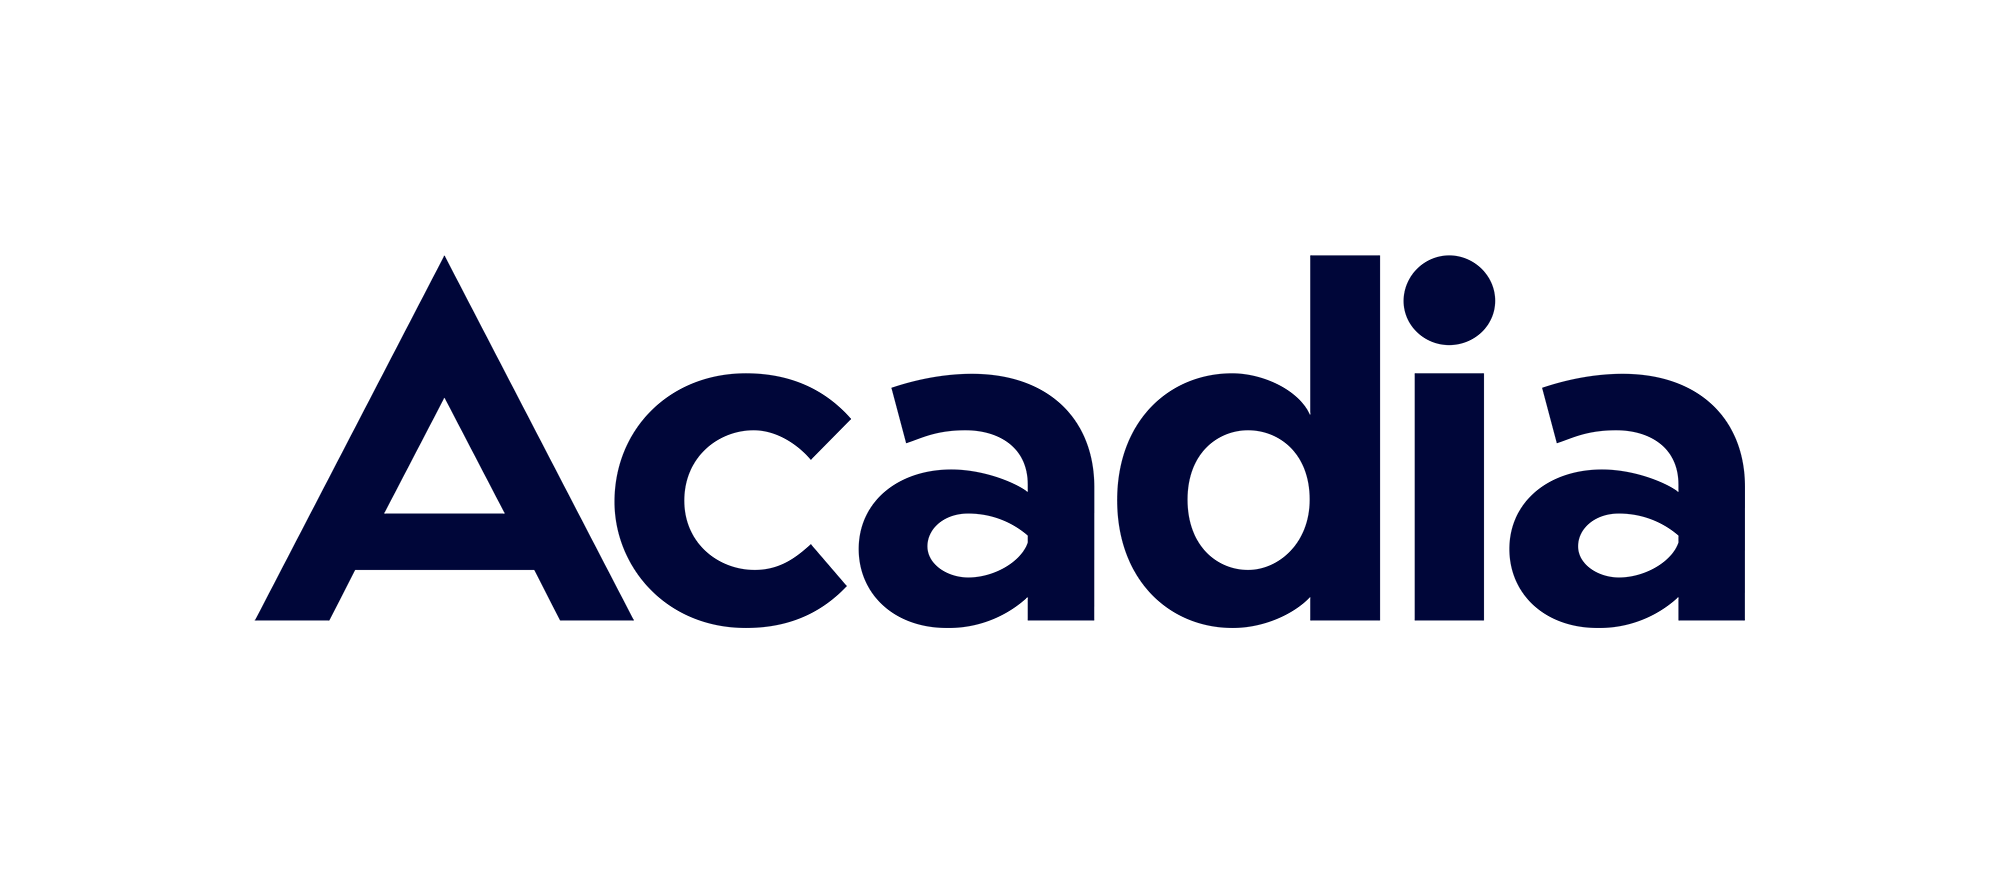 Acadia Logo in Dark Navy